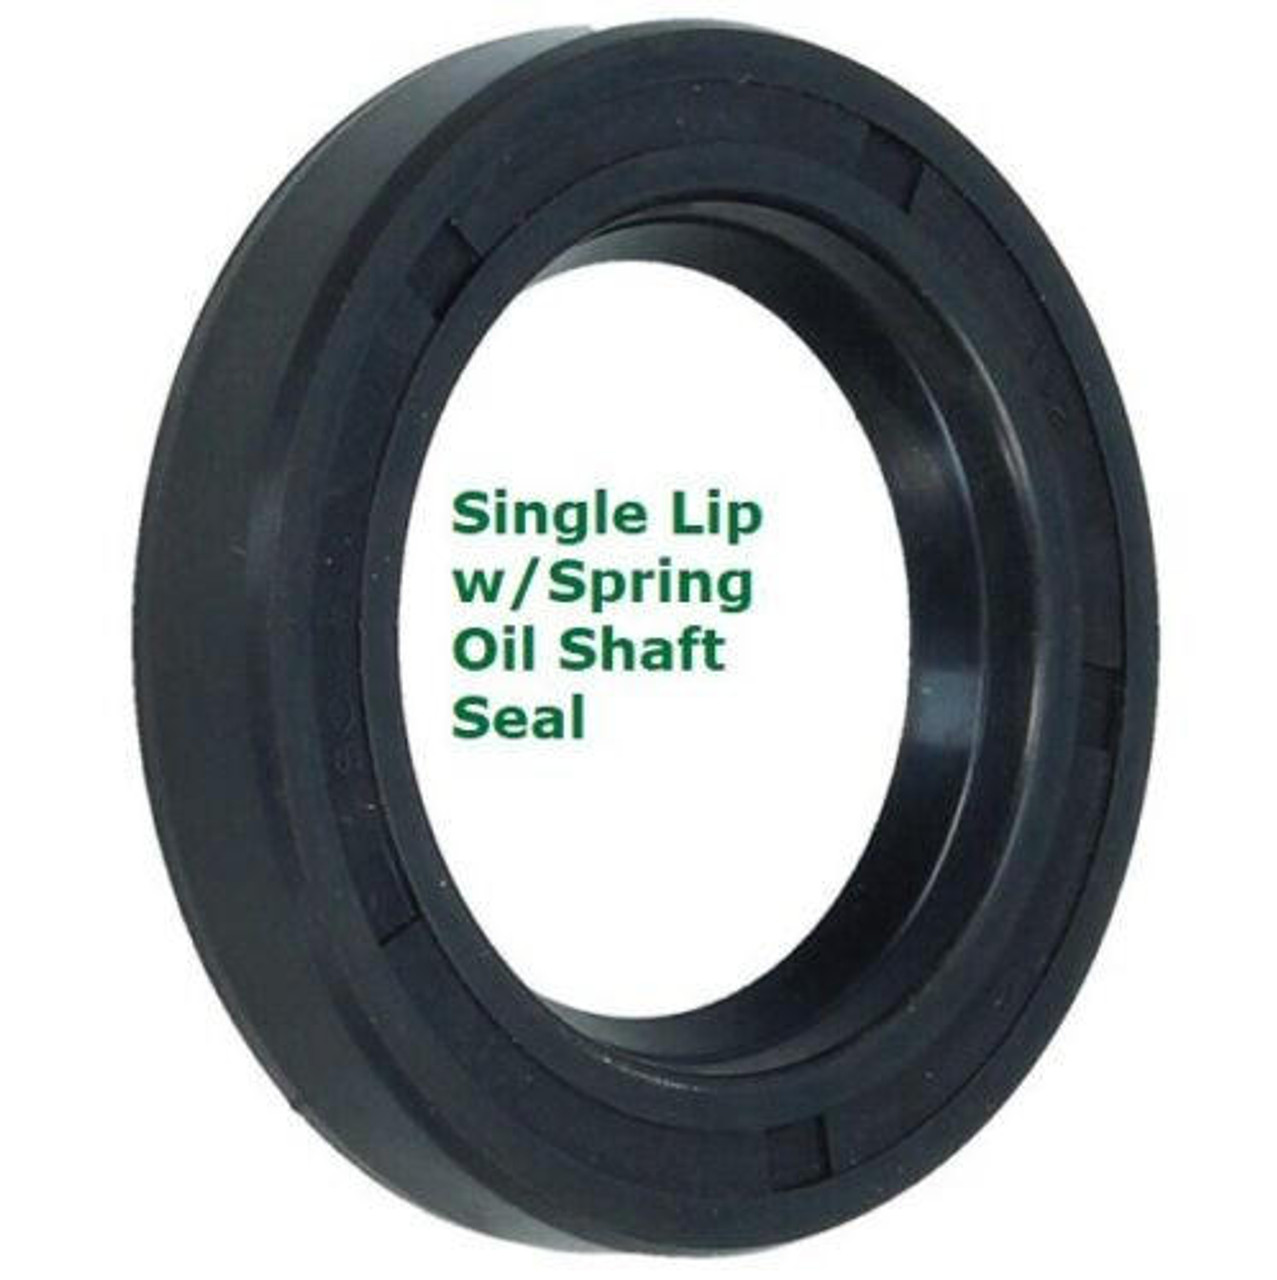 Metric Oil Shaft Seal 20 x 52 x 7mm Single Lip   Price for 1 pc